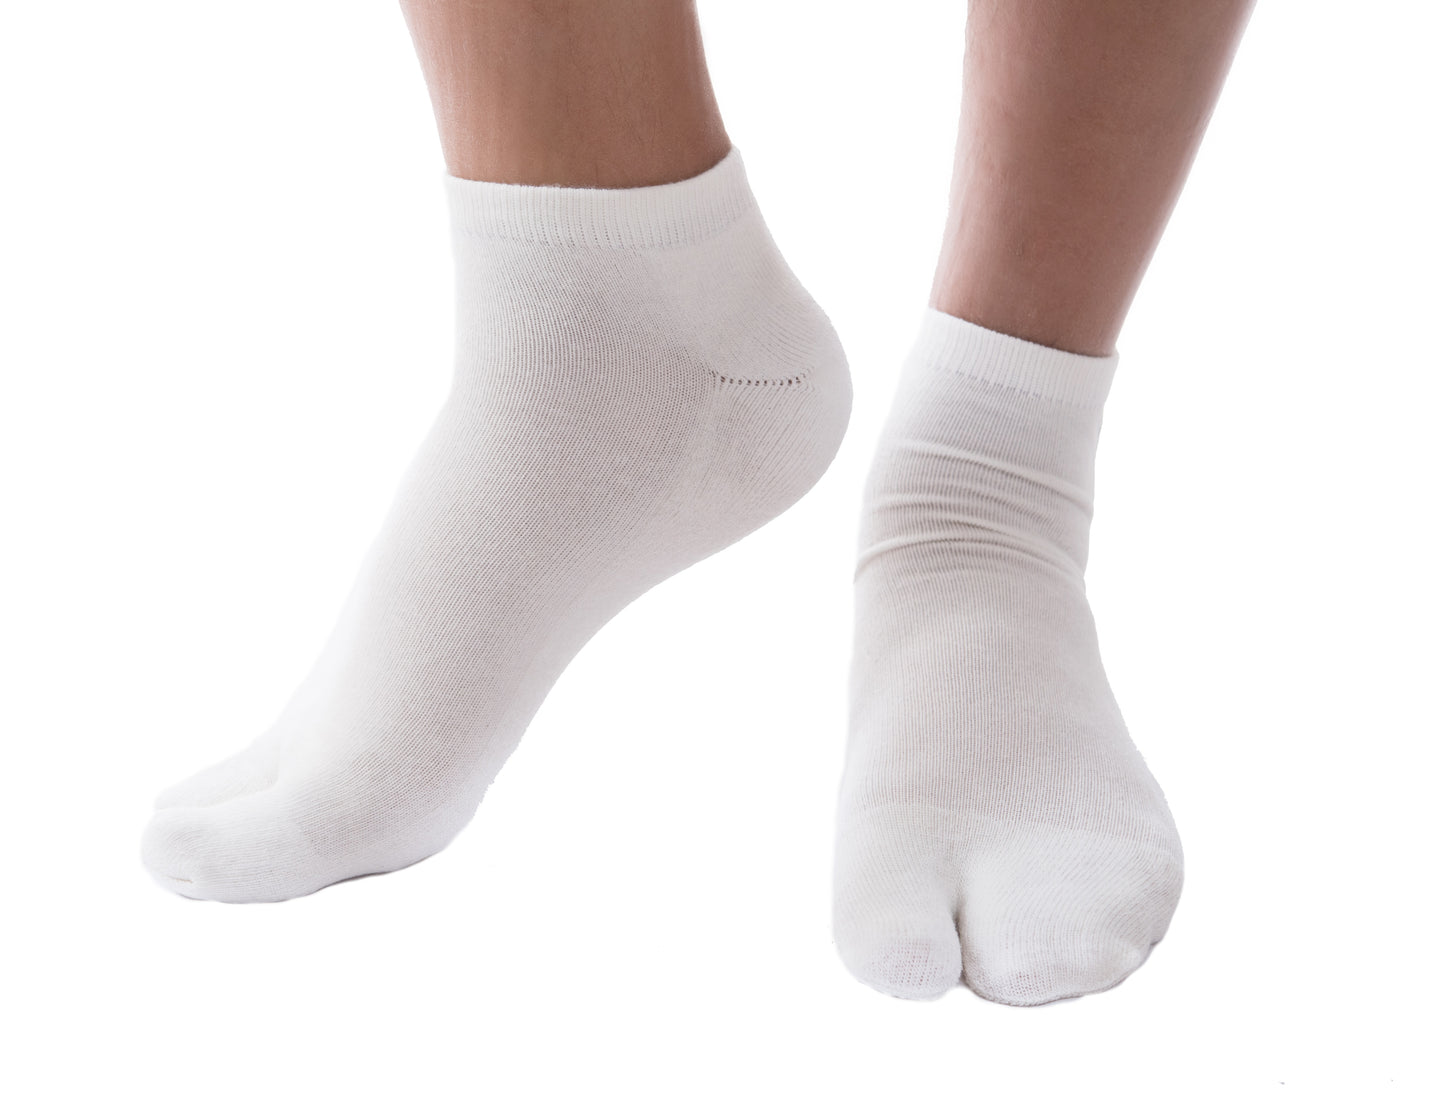 3 Pairs V-Toe Flip-Flop Tabi Big Toe White Ankle Socks Comfortable Stylish For Men And Women Fun Socks